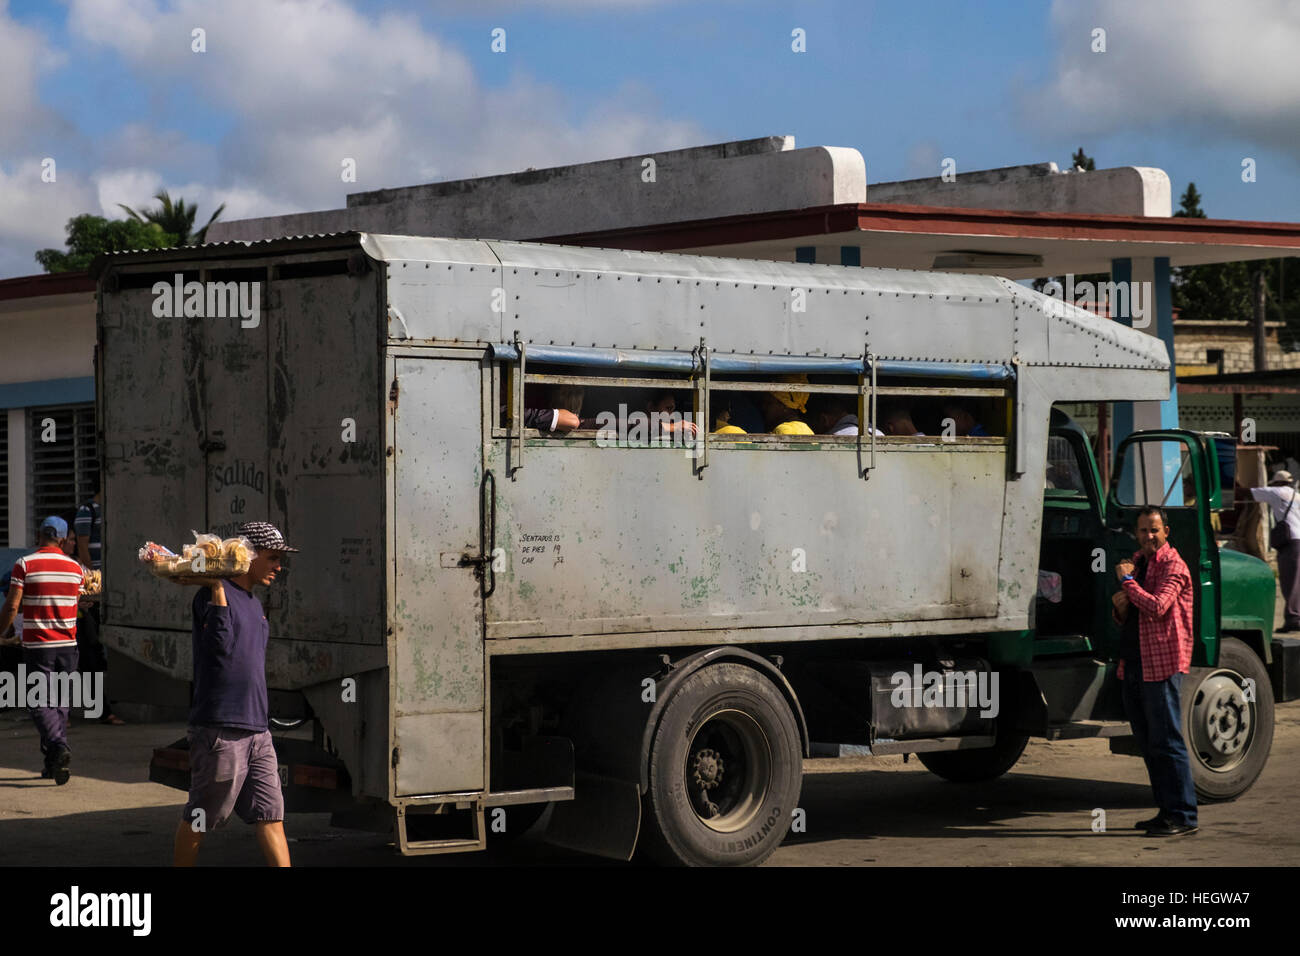 Truck converted as a bus, public transport at a terminal, near Las Tunas, Cuba Stock Photo